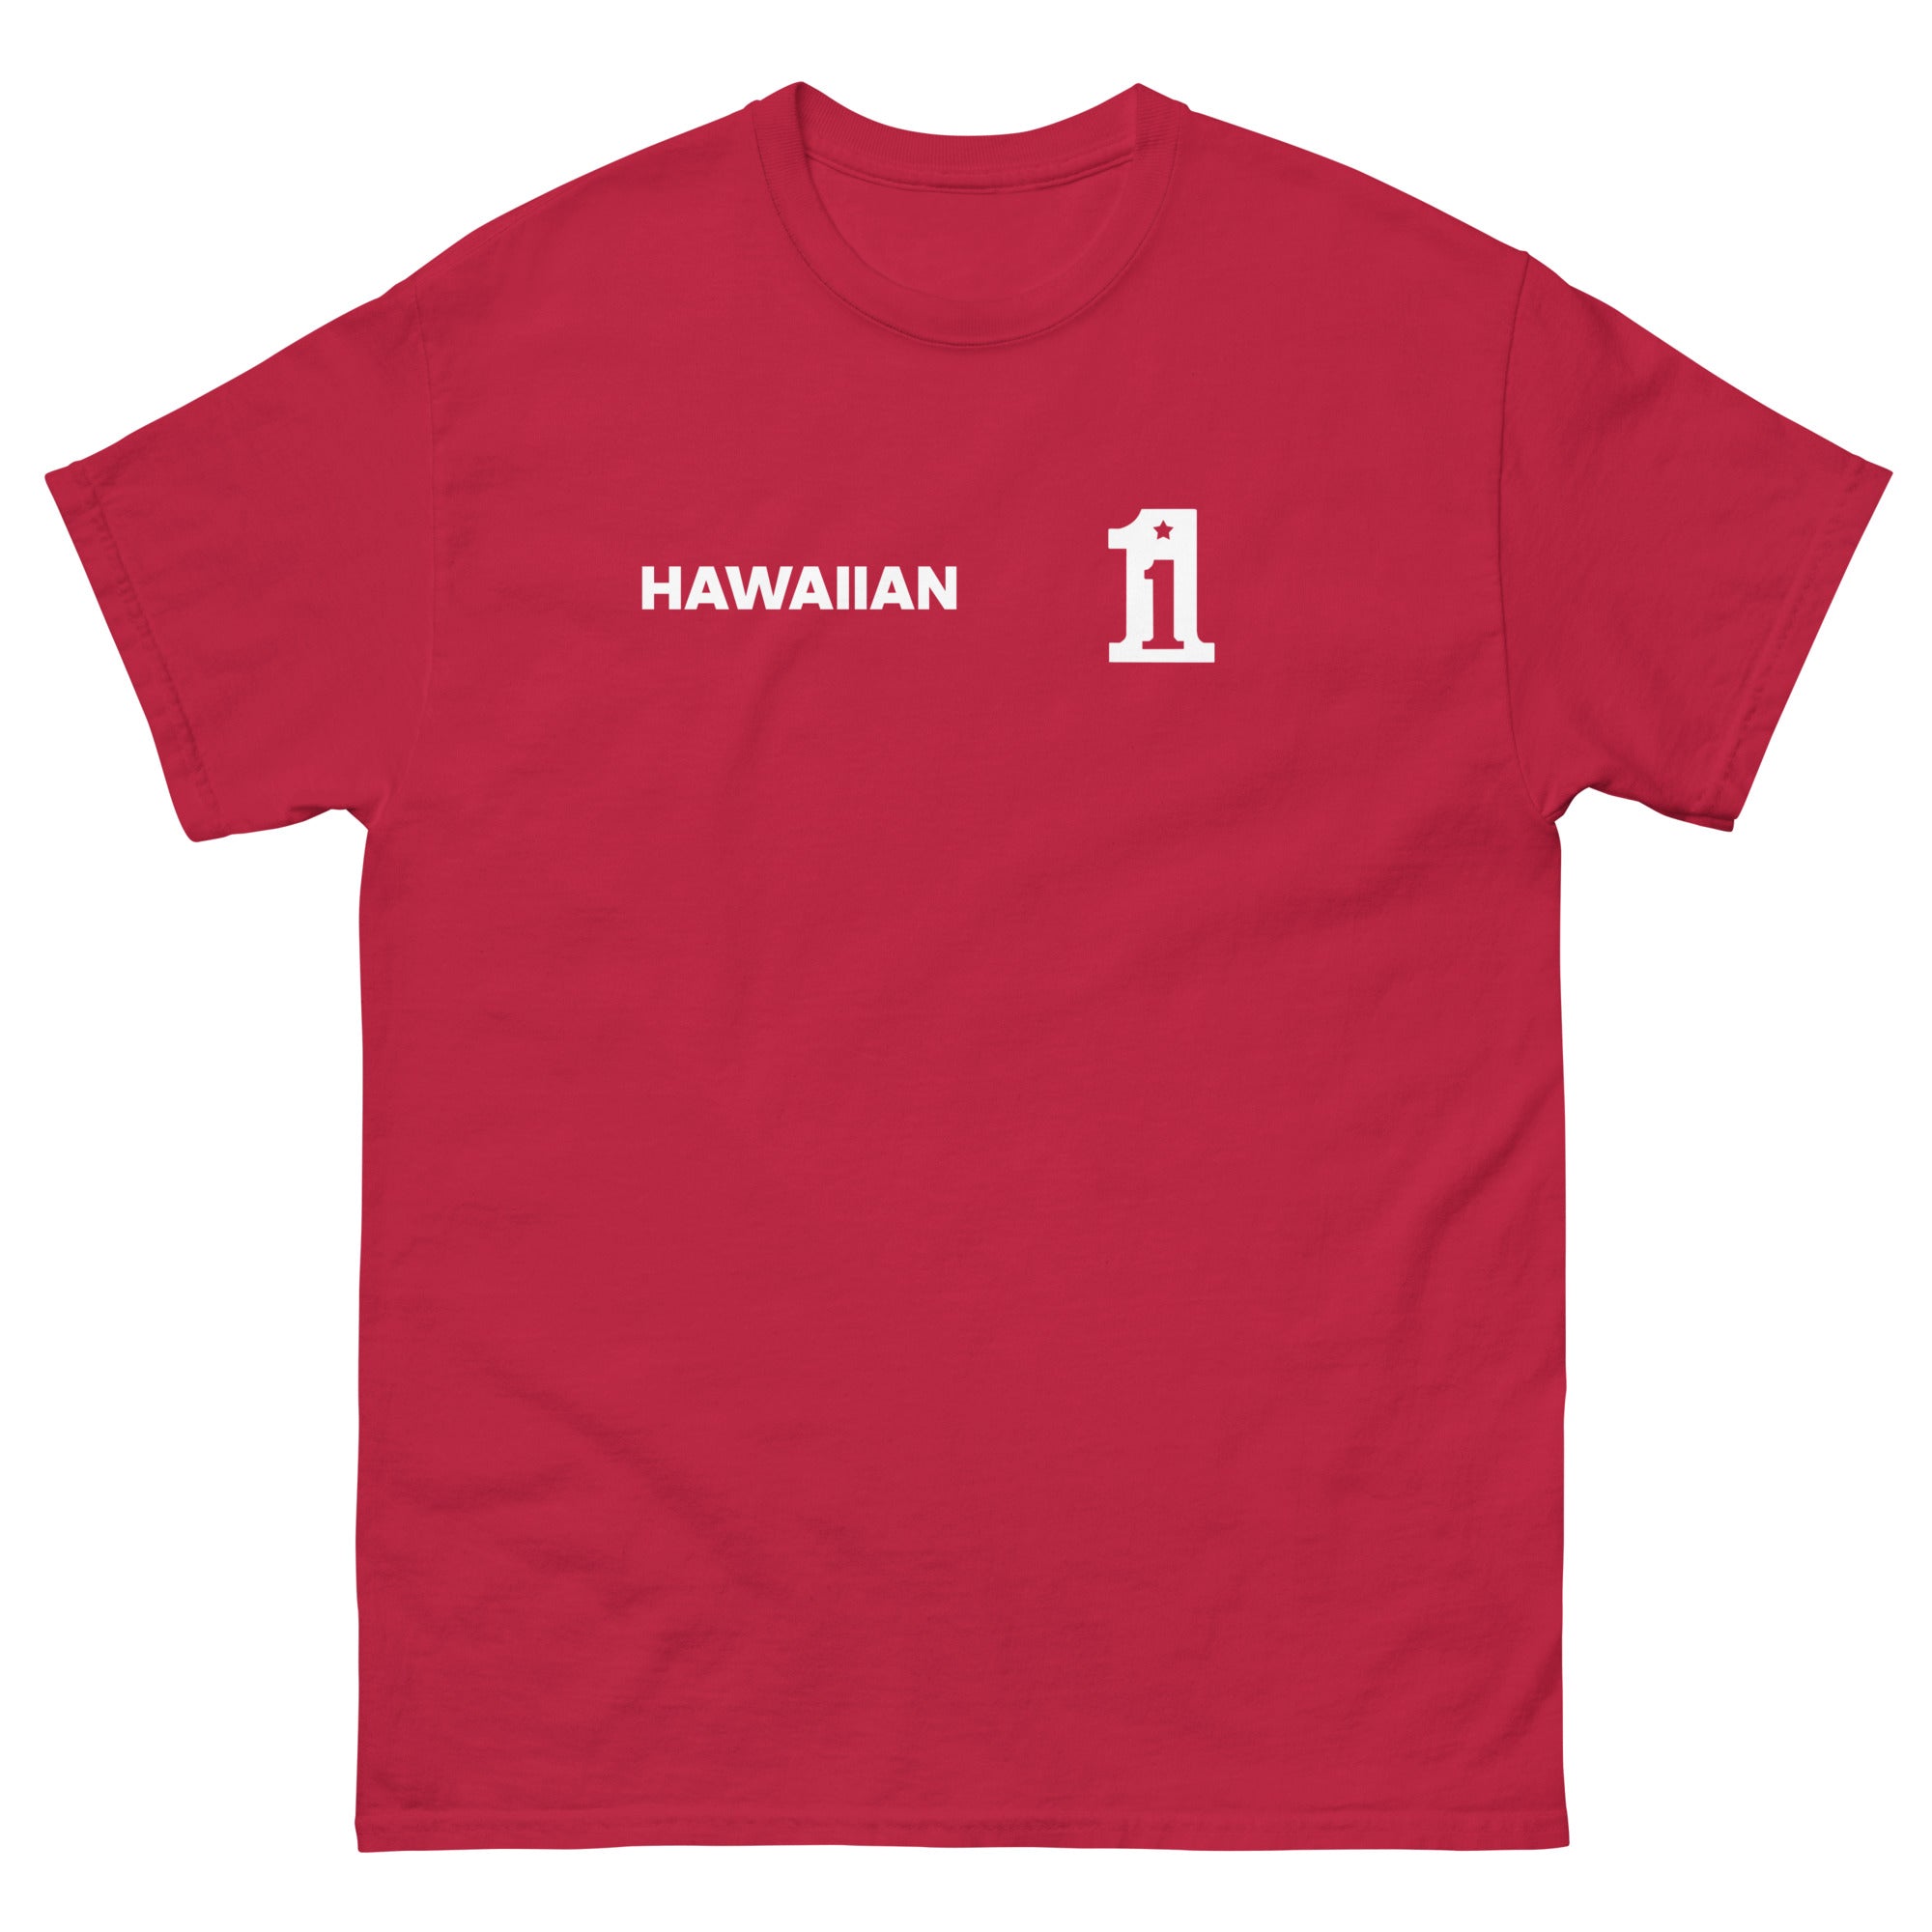 Donnie Allison Nascar Hawaiian red tshirt flat front